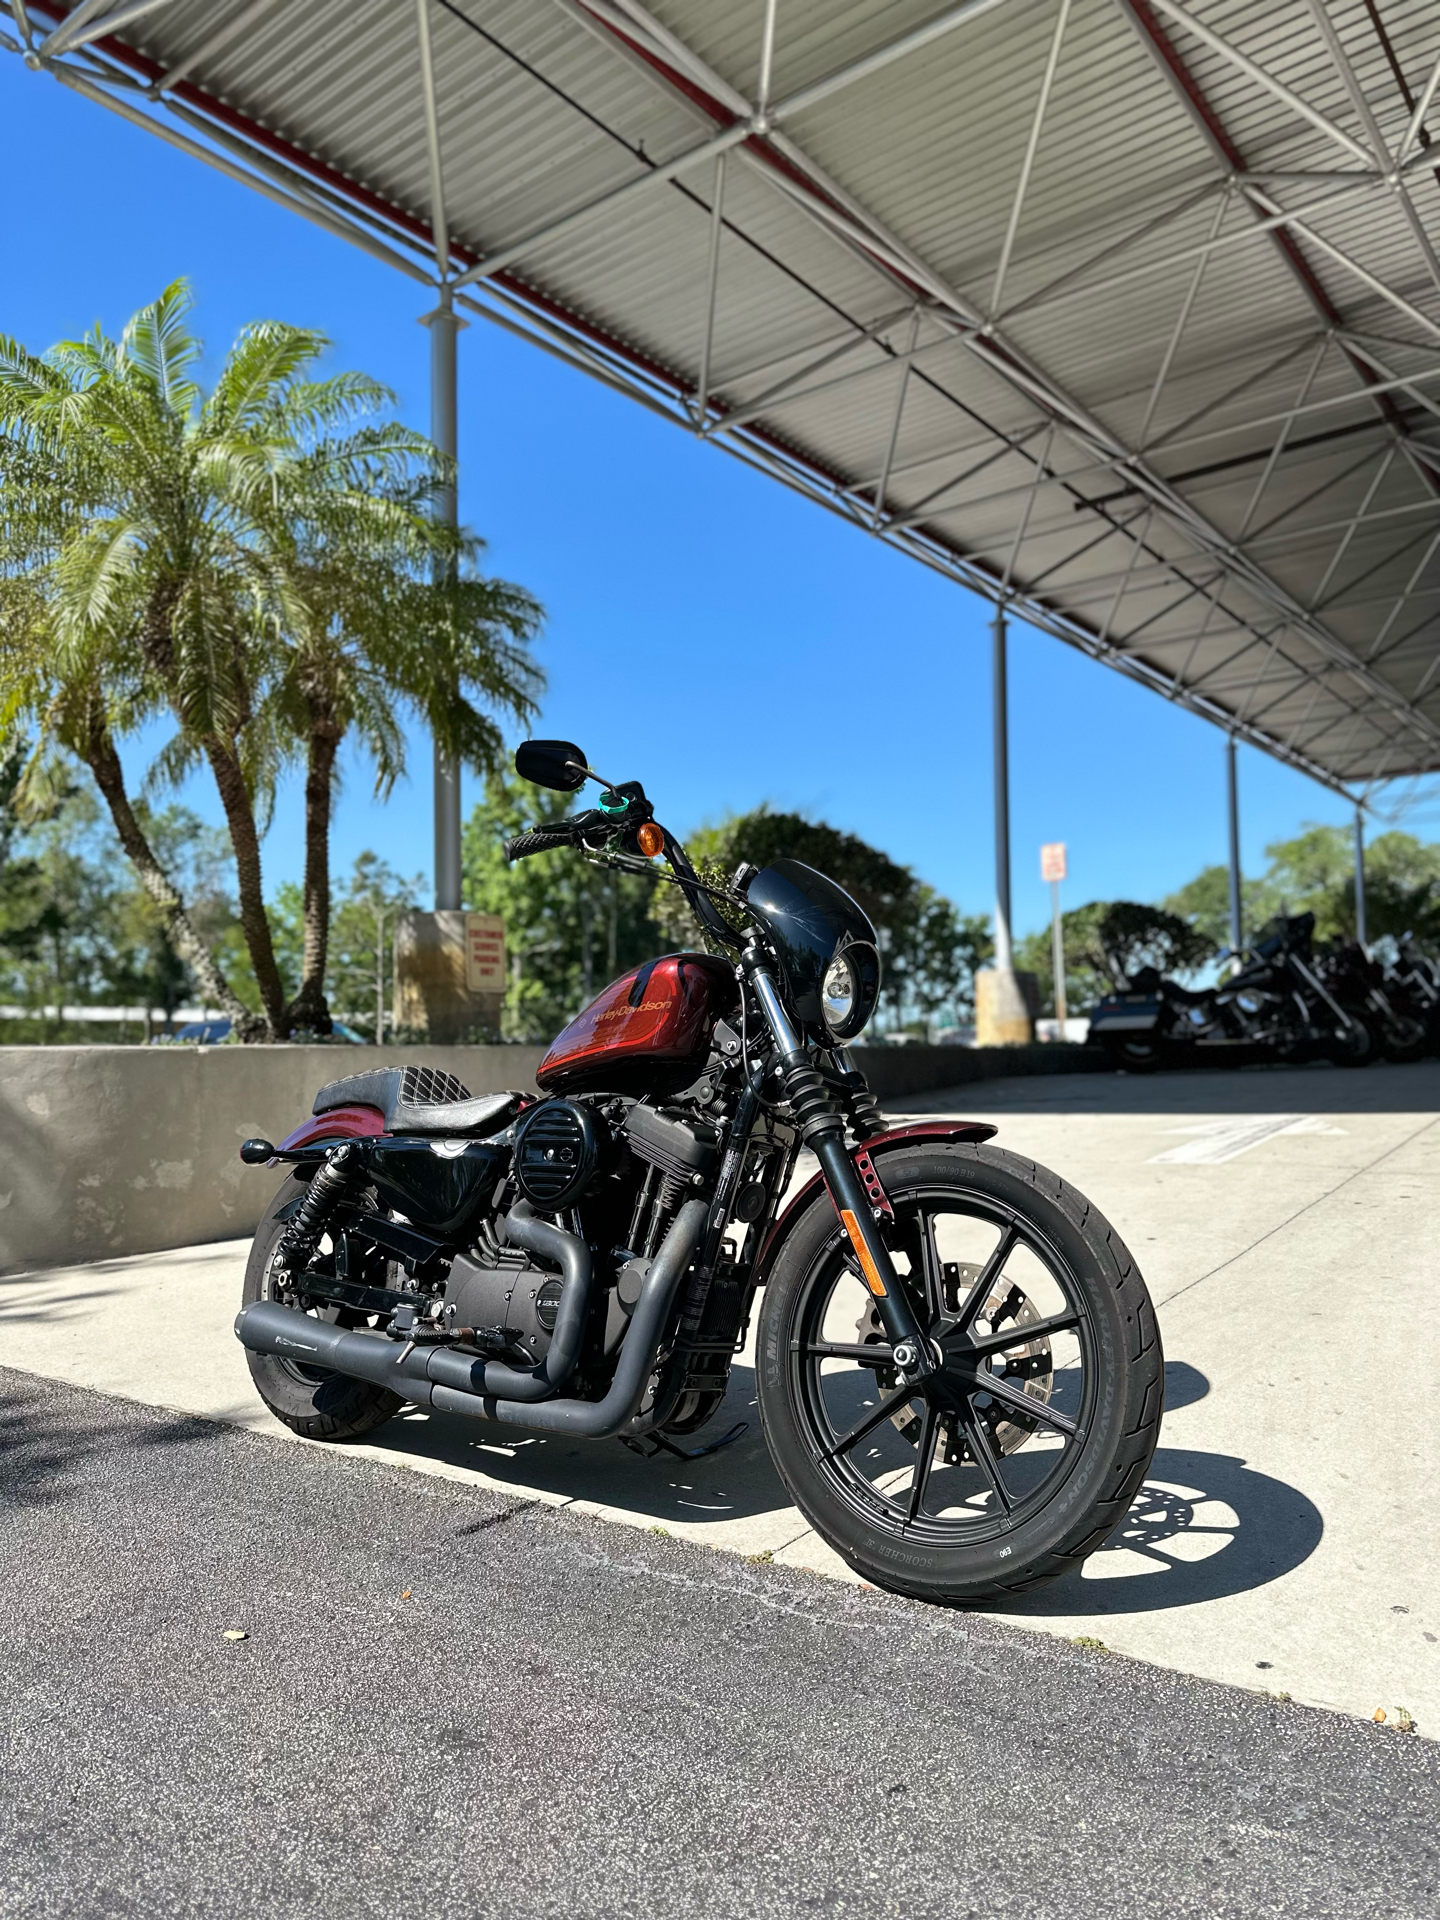 2019 Harley-Davidson Iron 1200™ in Sanford, Florida - Photo 2